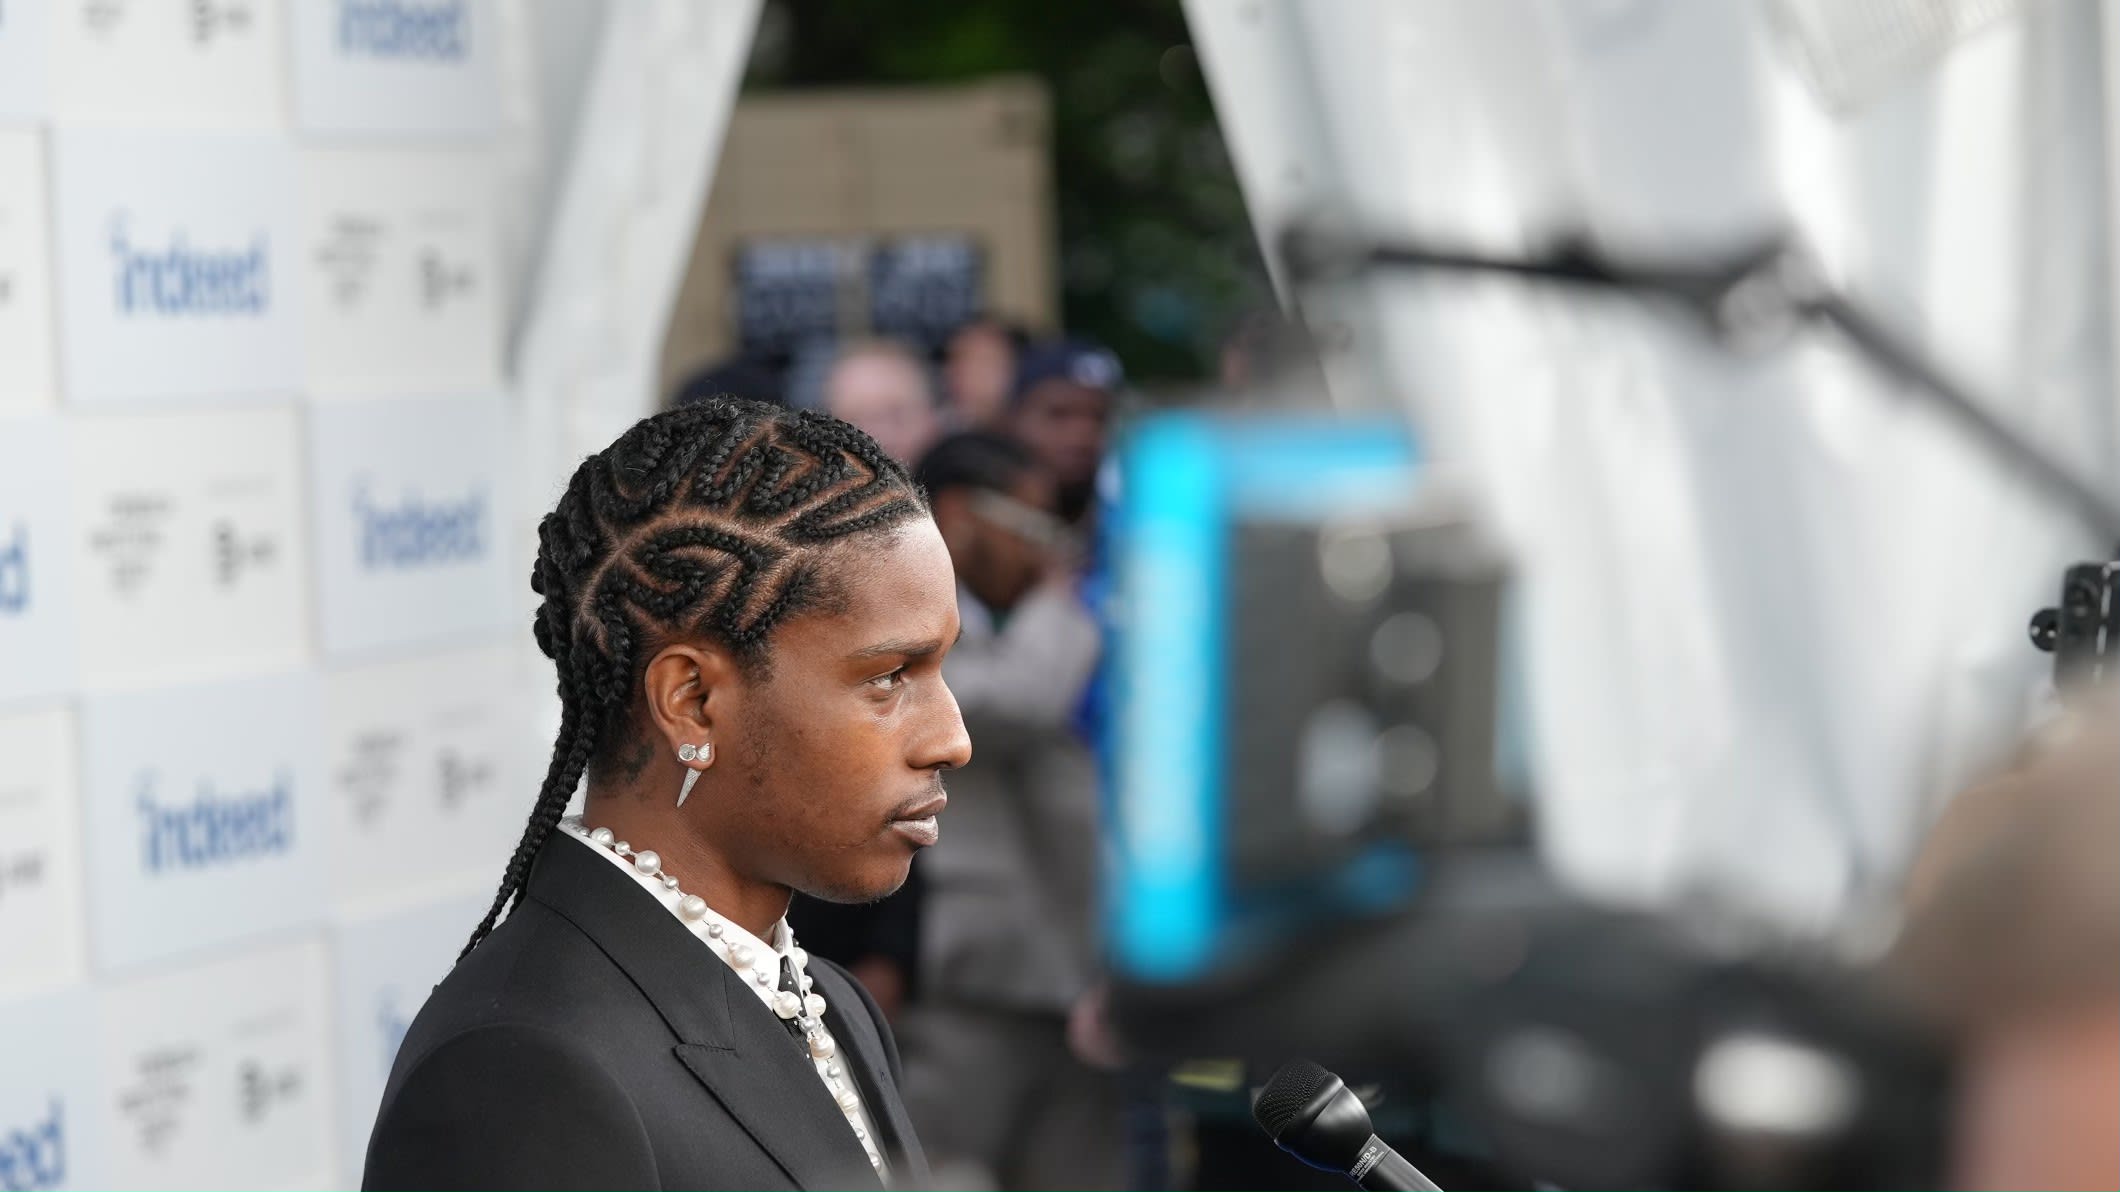 ASAP Rocky attends Tribeca Film Festival 2021